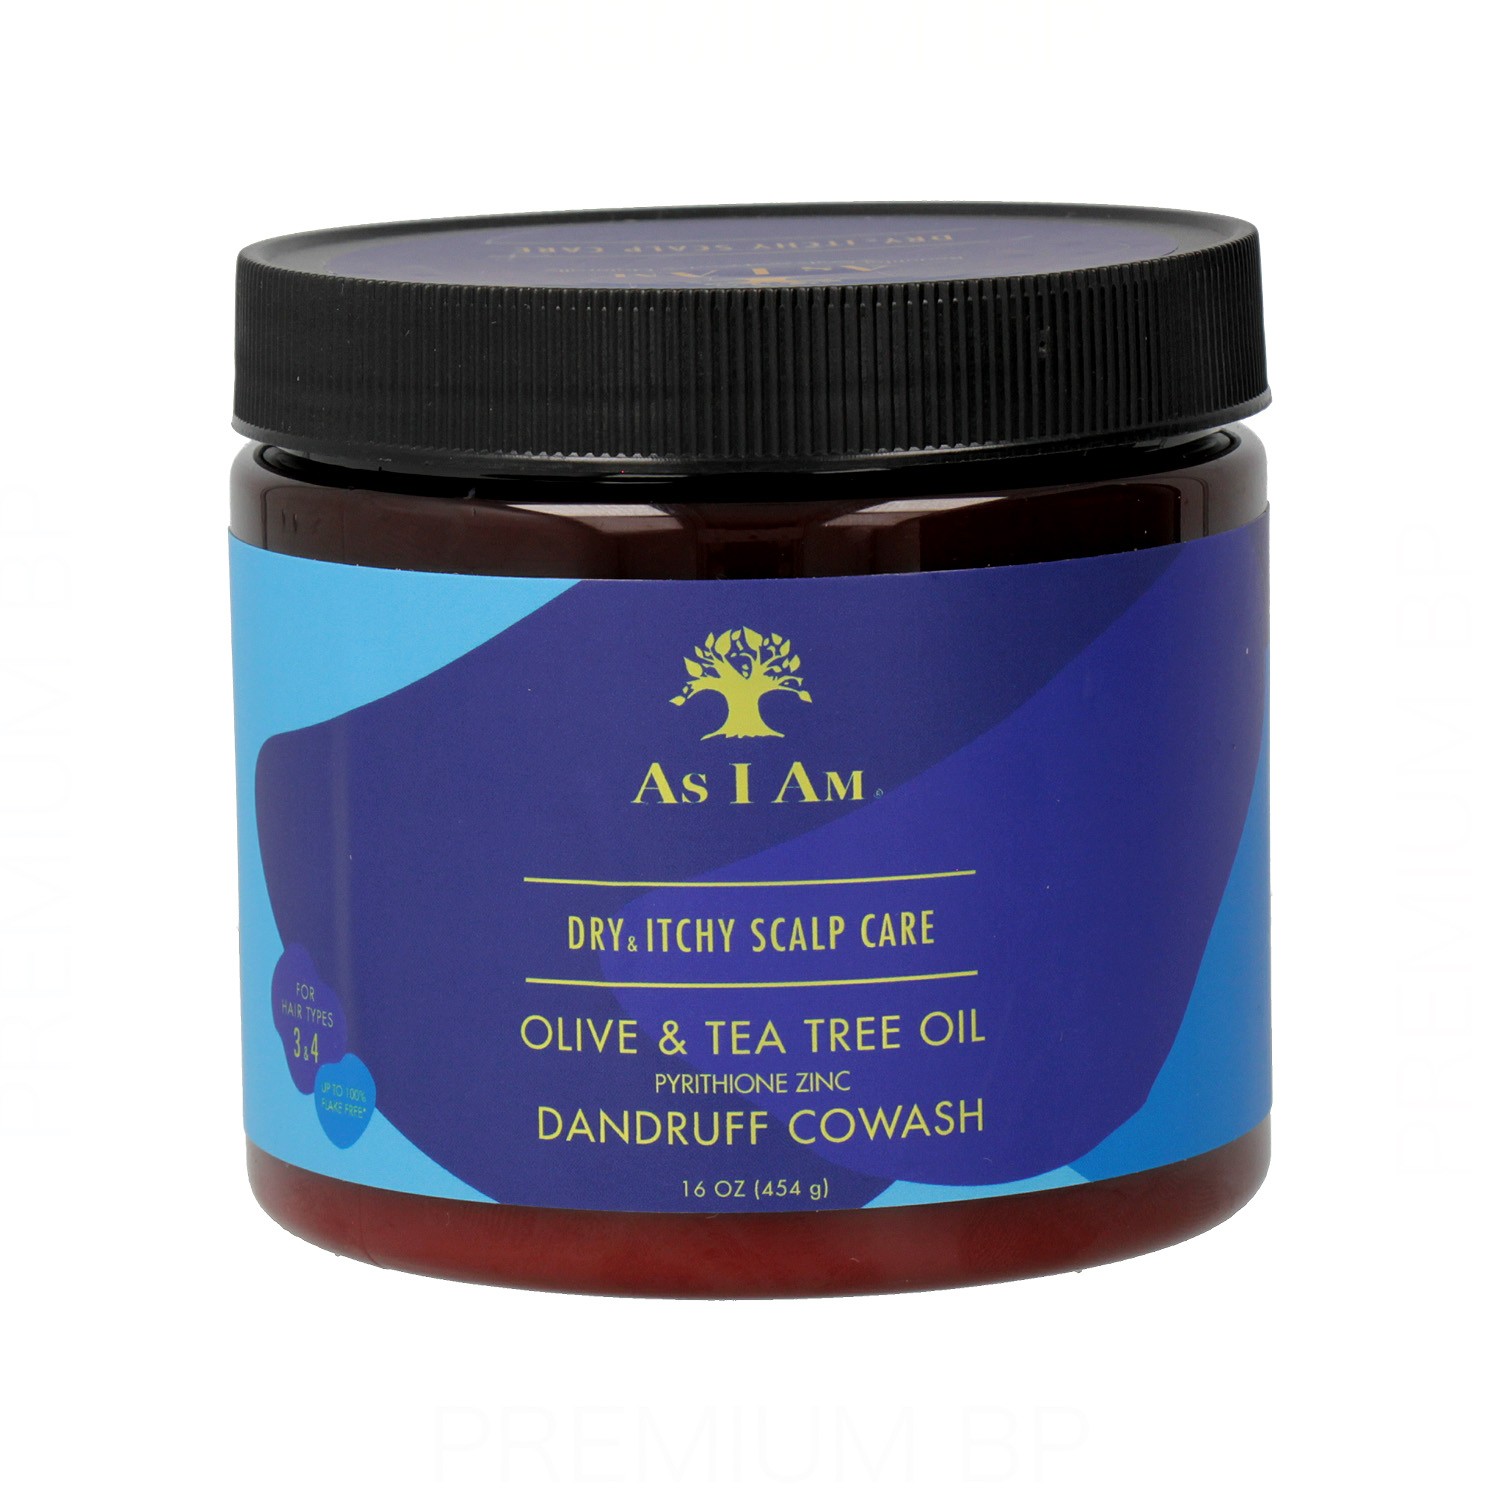 As I Am - As i am dry & itcht scalp care olive & tea tree oil dandruff cowash 454 g, combate y previene la caspa